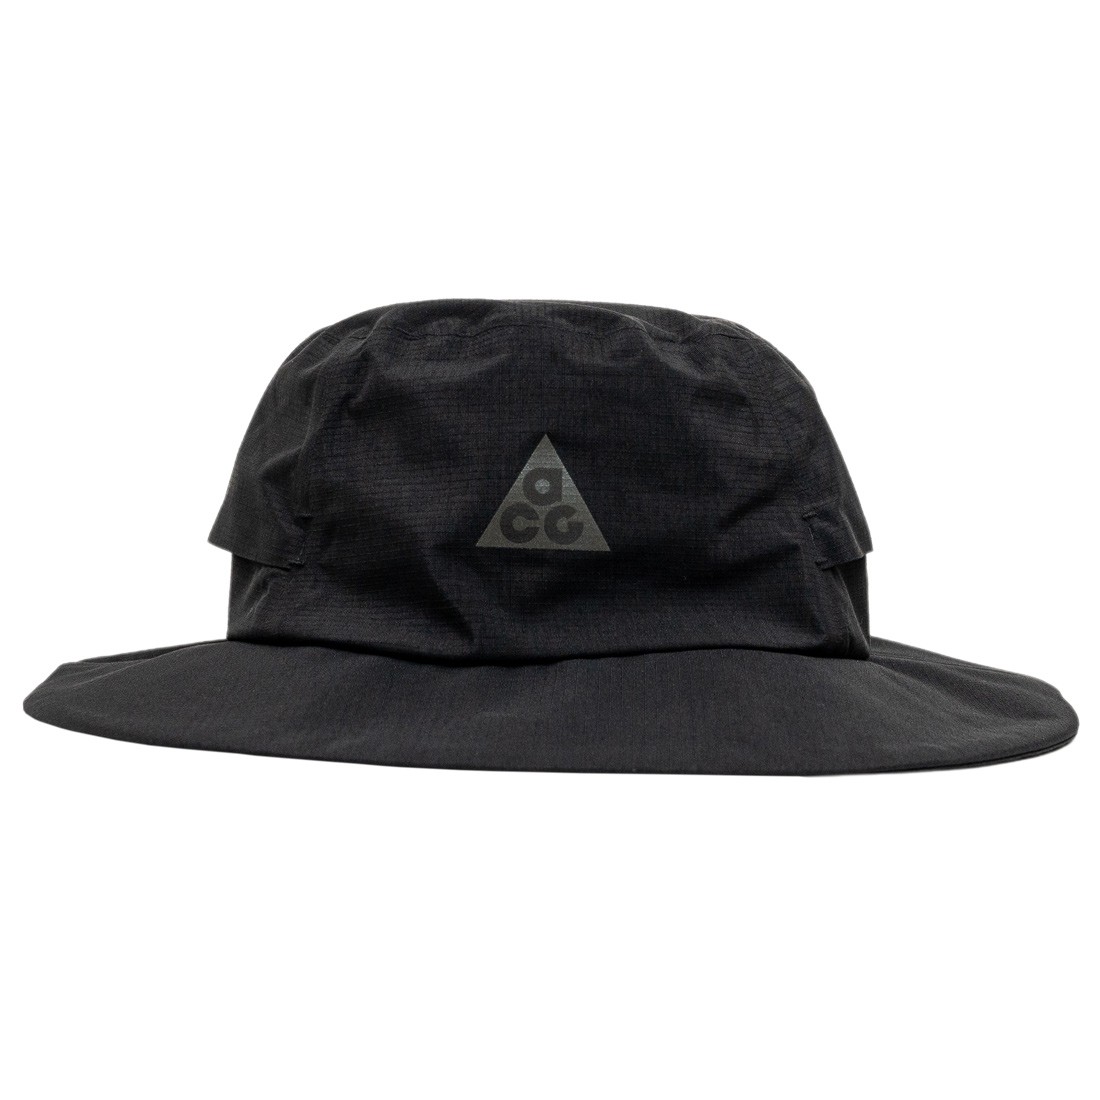 Nike Unisex Acg Storm-Fit Bucket Cap (black / anthracite)